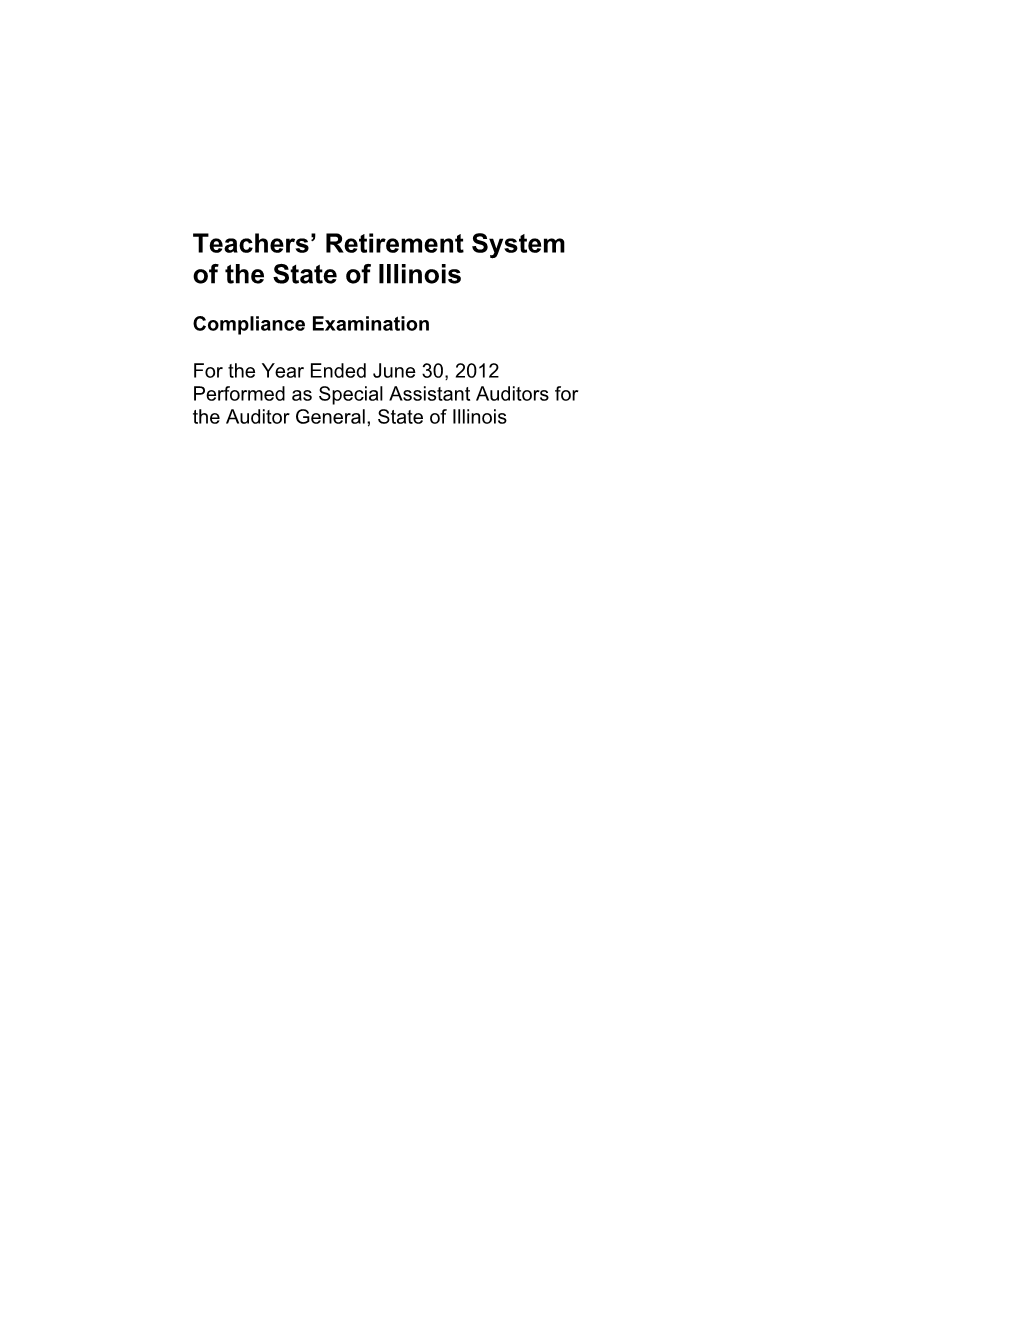 Teachers' Retirement System of the State of Illinois 2815 West Washington Street 1P.O